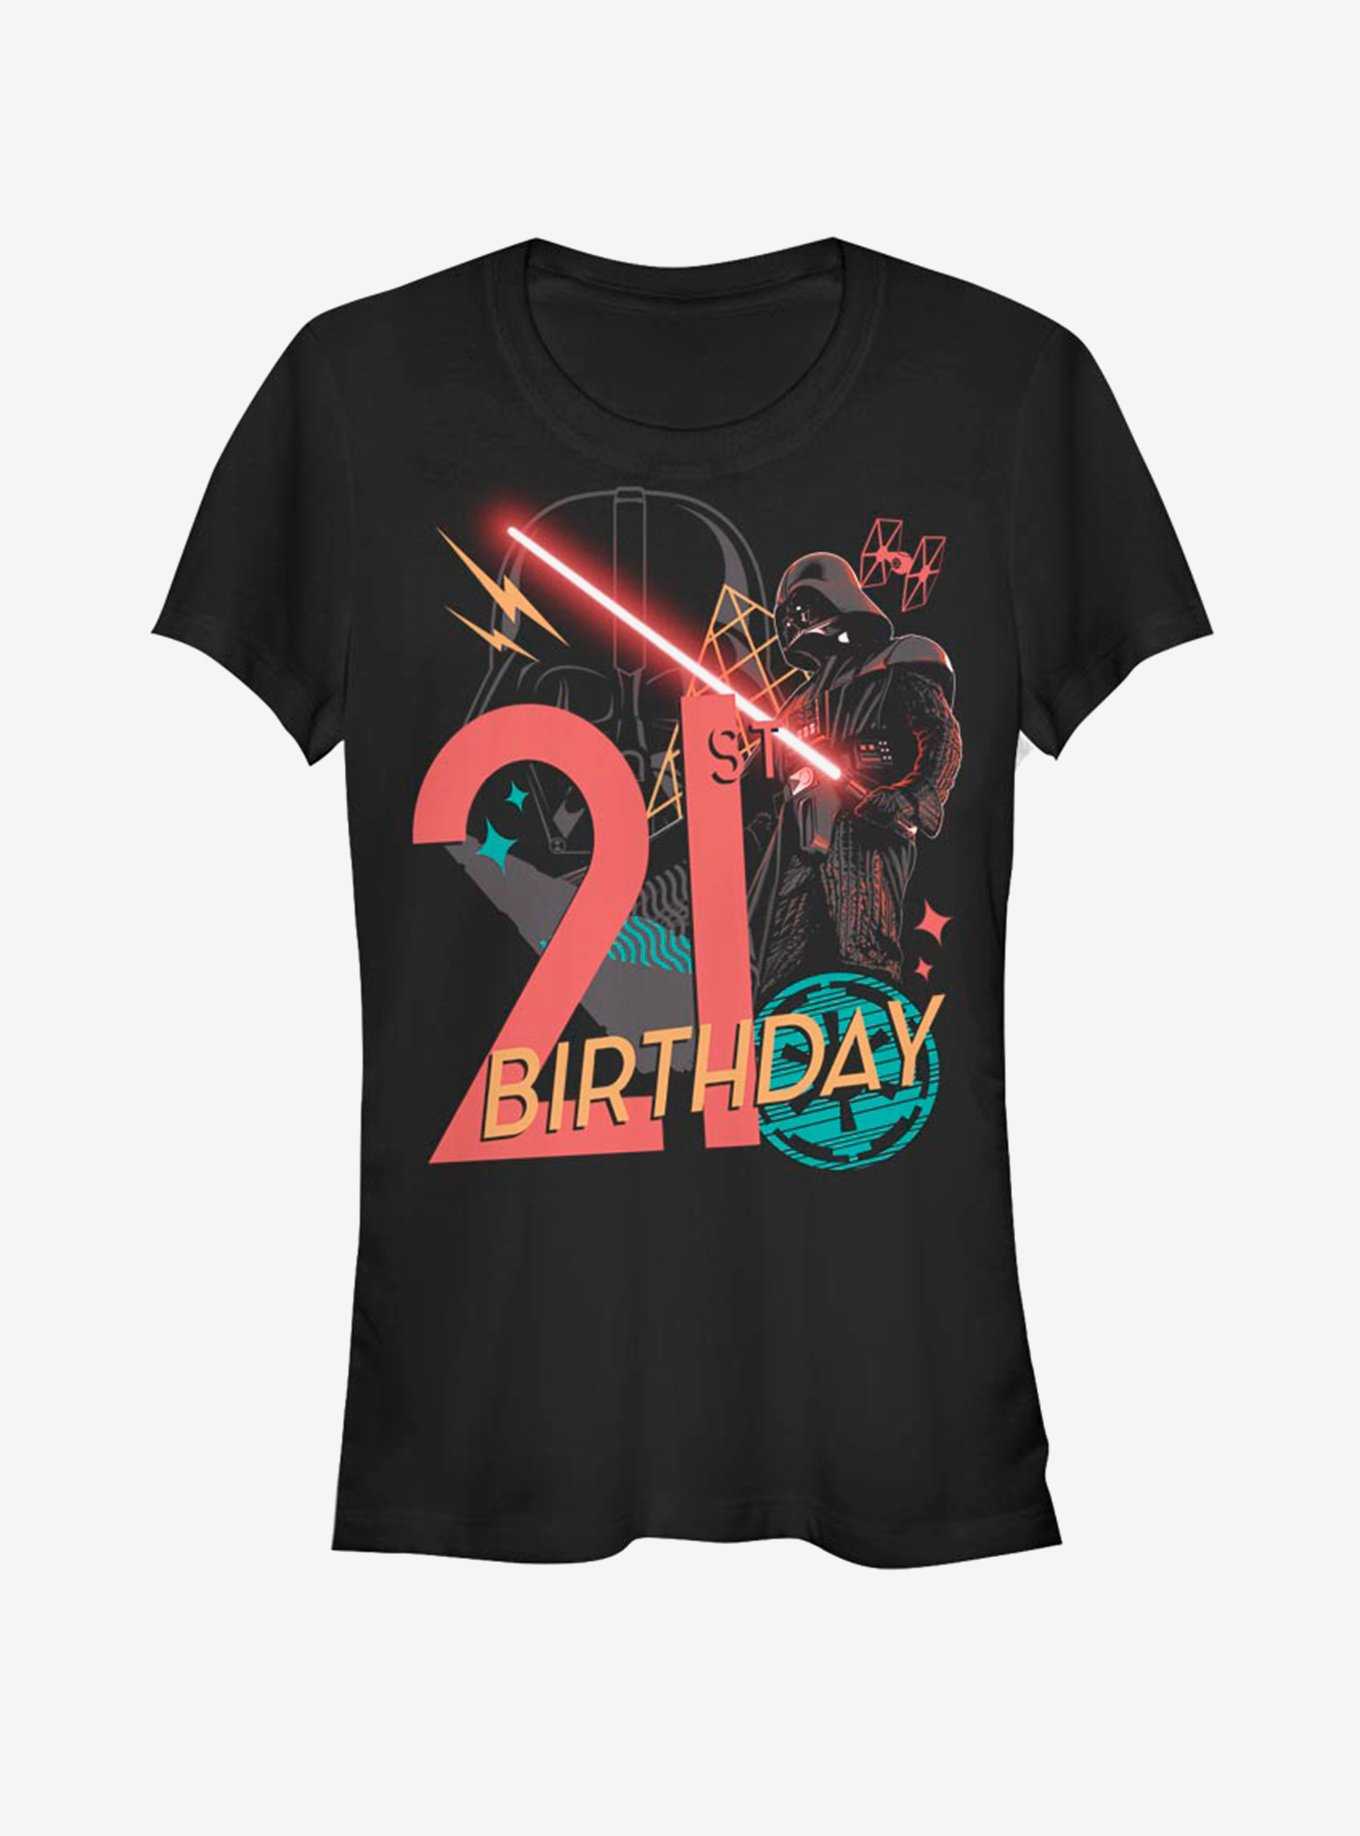 Star Wars Vader 21st B-Day Girls T-Shirt, , hi-res